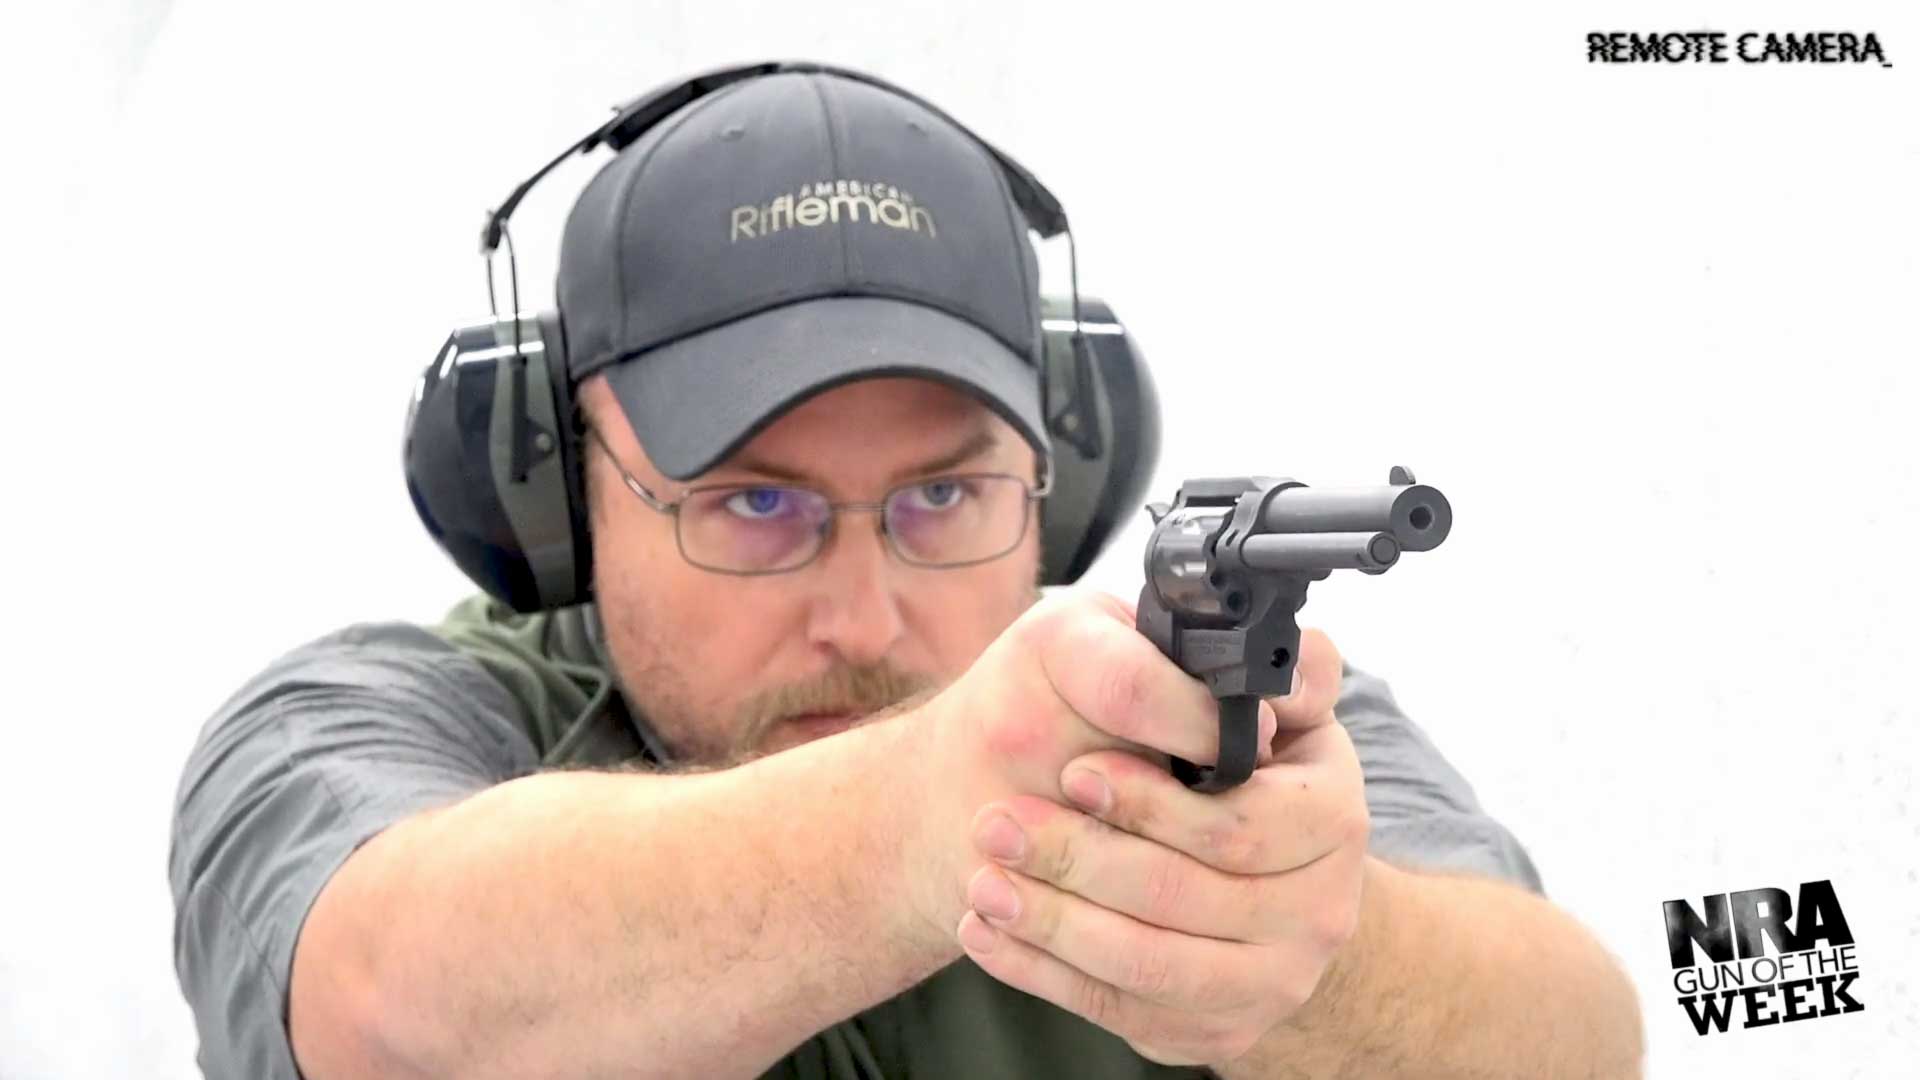 Man in gray hat shirt earmuffs protective gear shooting gun revovler black pistol text on image noting "NRA GUN OF THE WEEK REMOTE CAMERA"